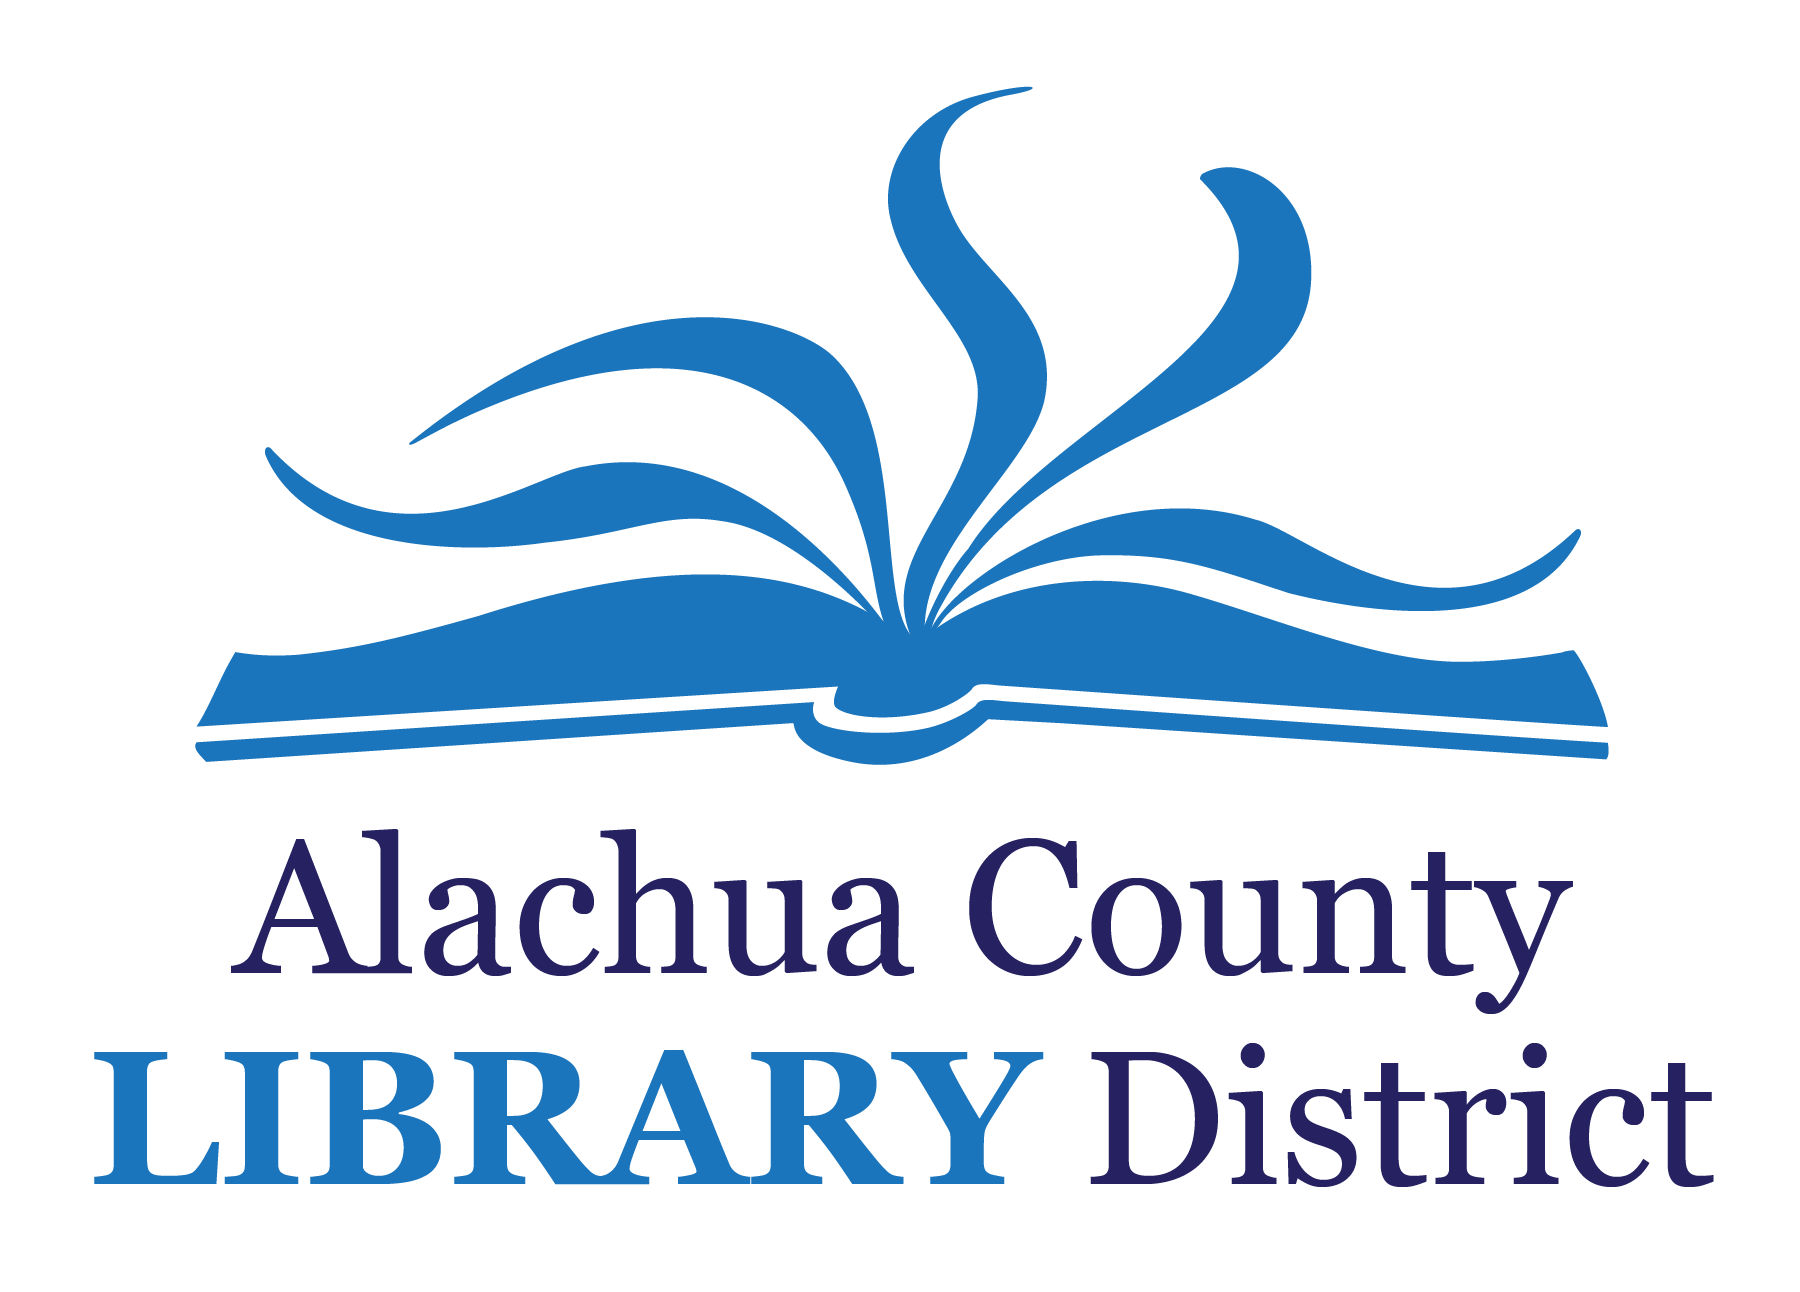 Alachua County Library District logo